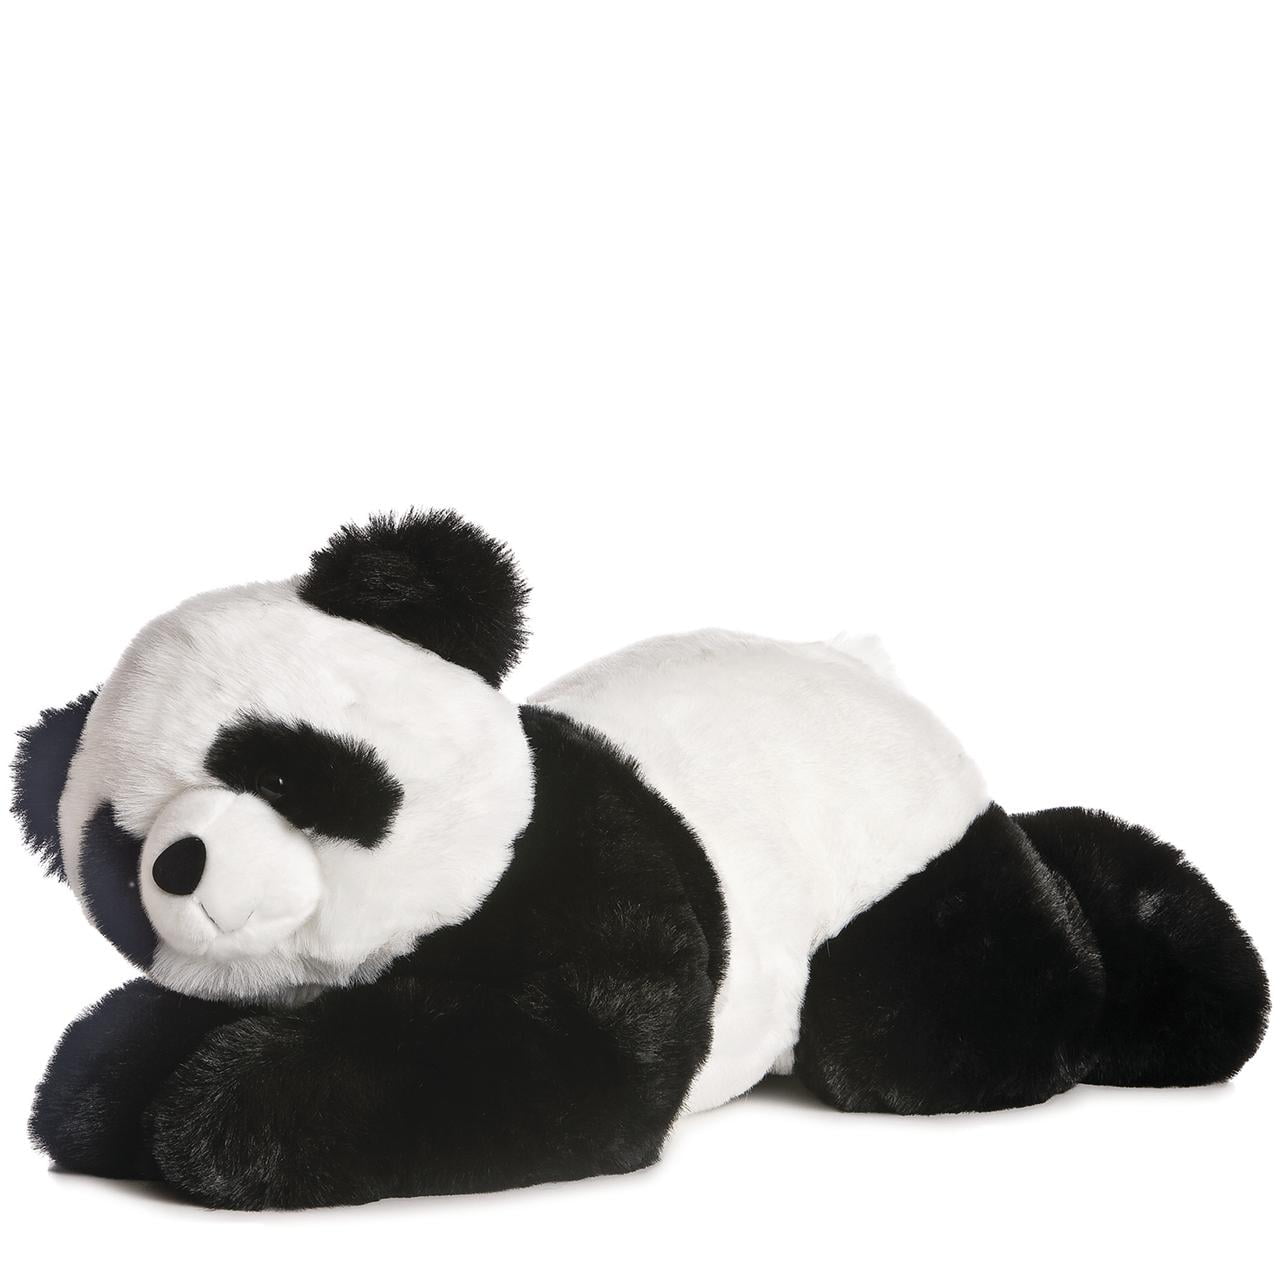 Panda TheMogan Cute Teddy Baby Little Bear Super Soft Plush Stuffed Animal Toy 